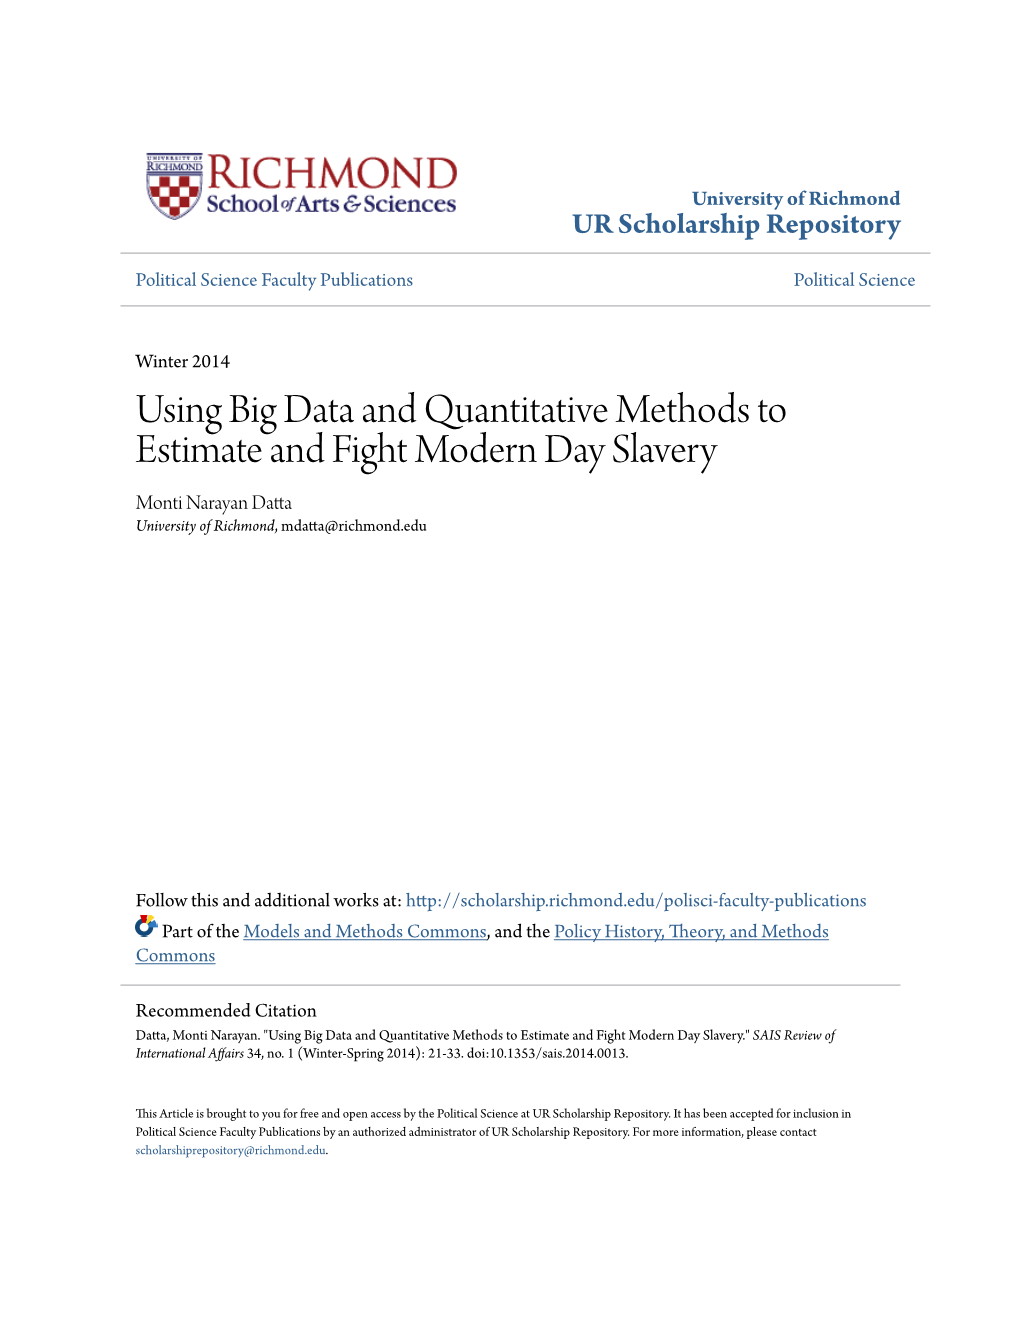 Using Big Data and Quantitative Methods to Estimate and Fight Modern Day Slavery Monti Narayan Datta University of Richmond, Mdatta@Richmond.Edu